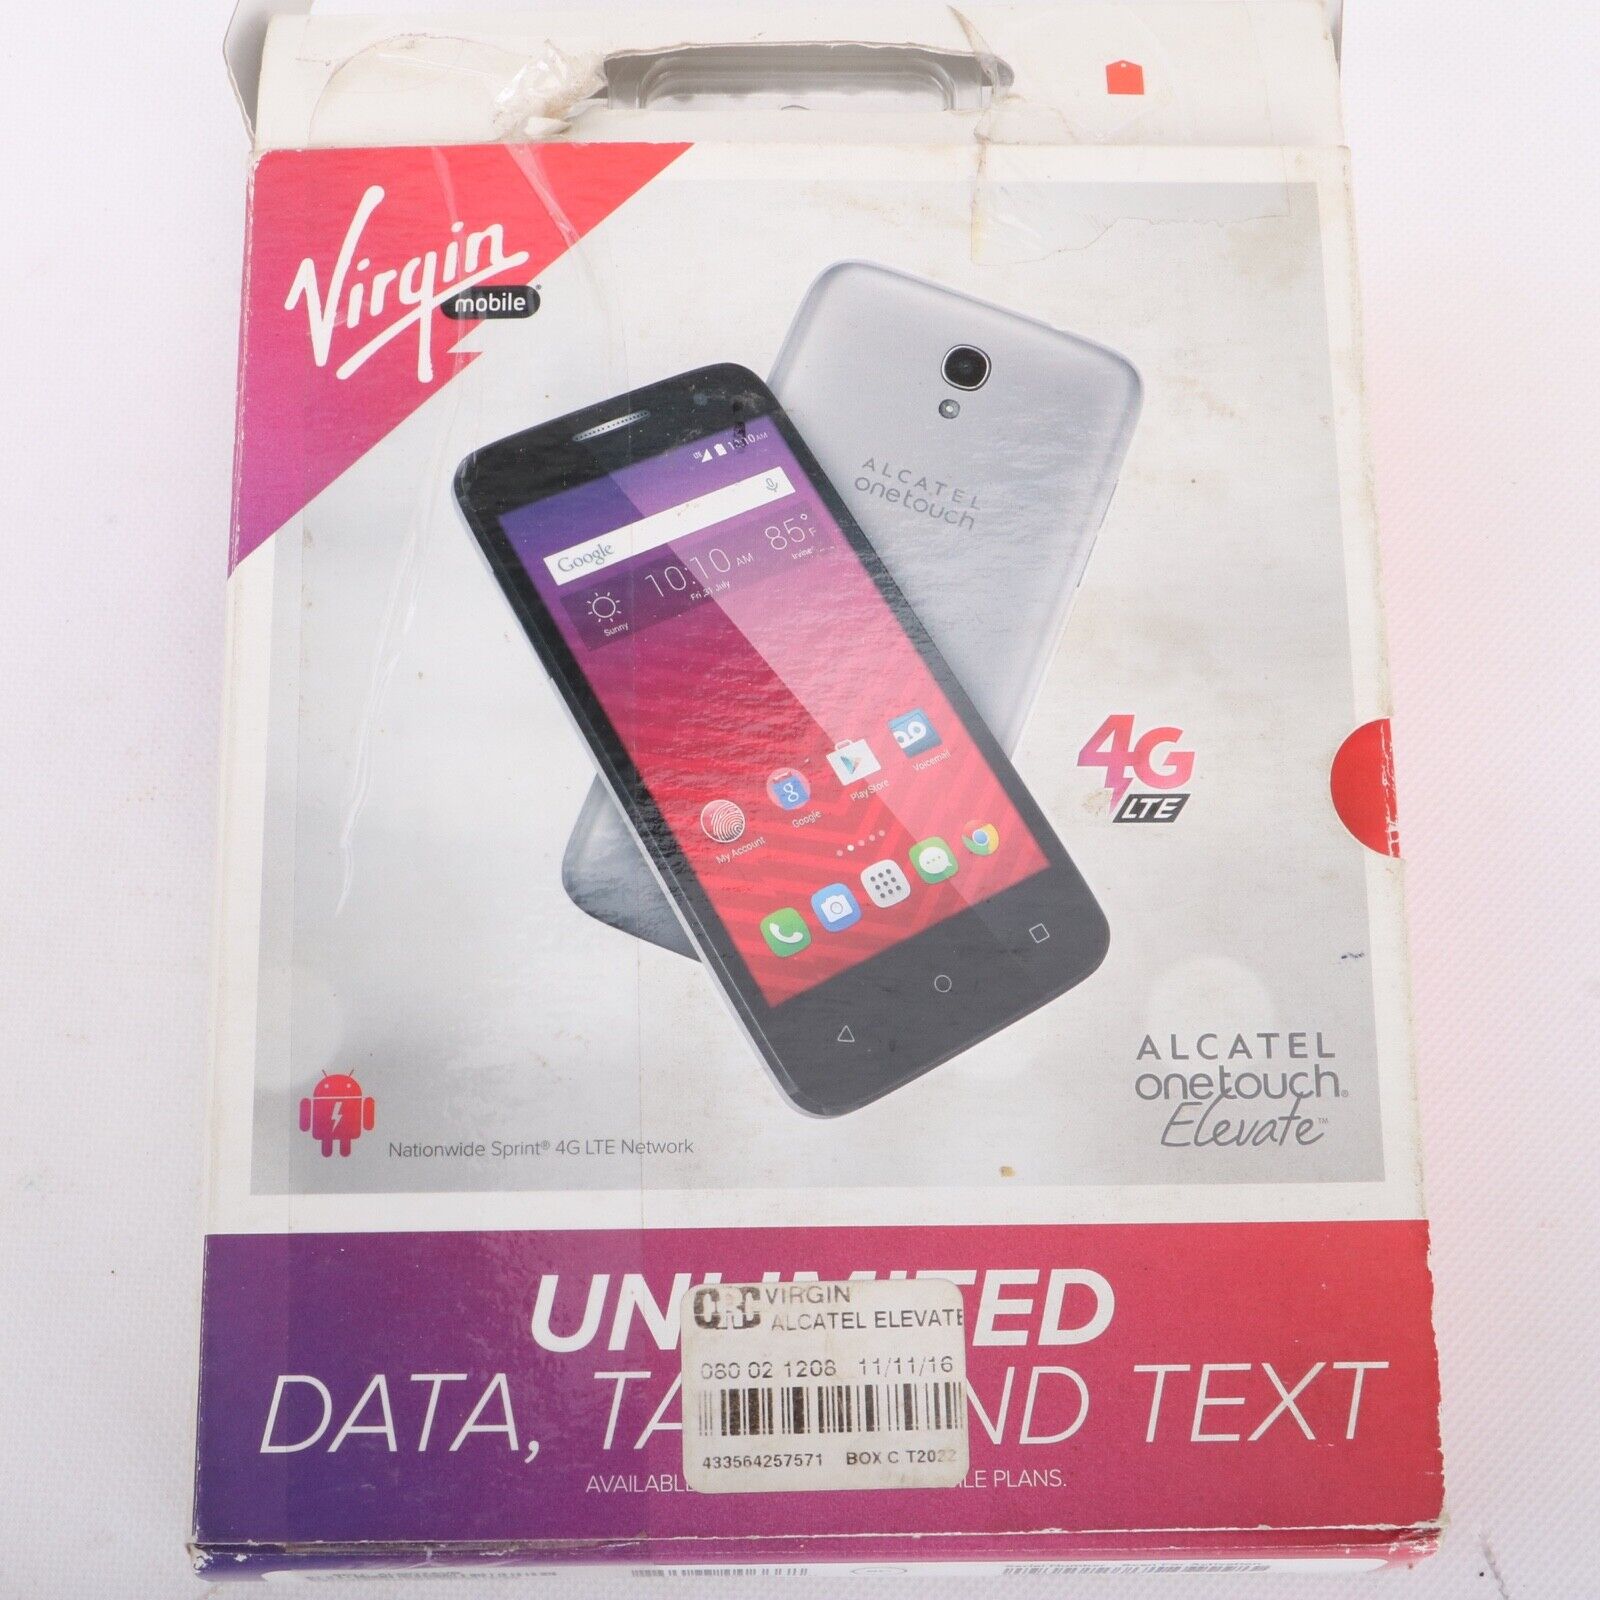 Alcatel OneTouch Elevate Virgin Mobile Smartphone